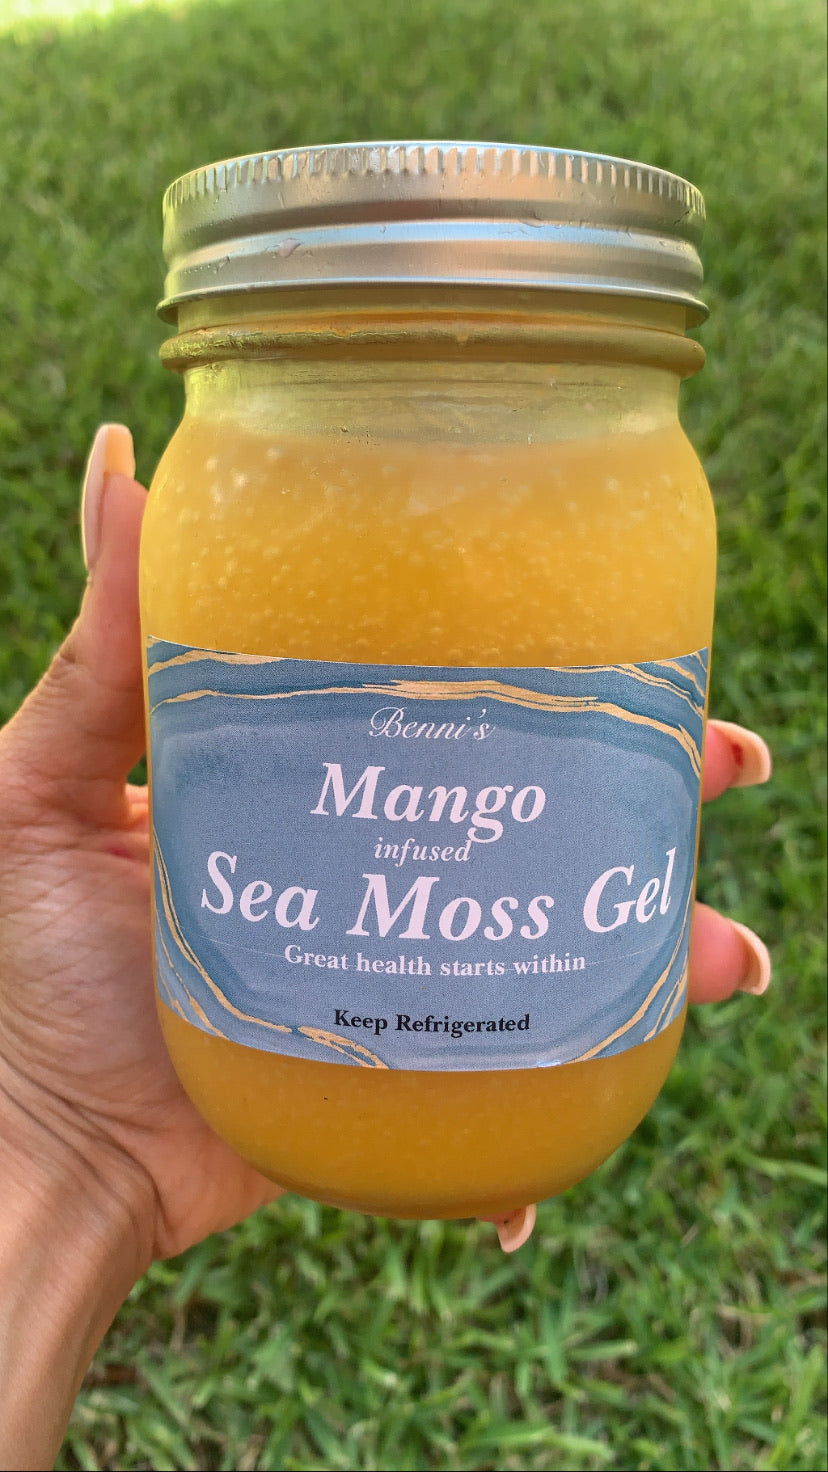 Mango infused Sea Moss Gel 16oz